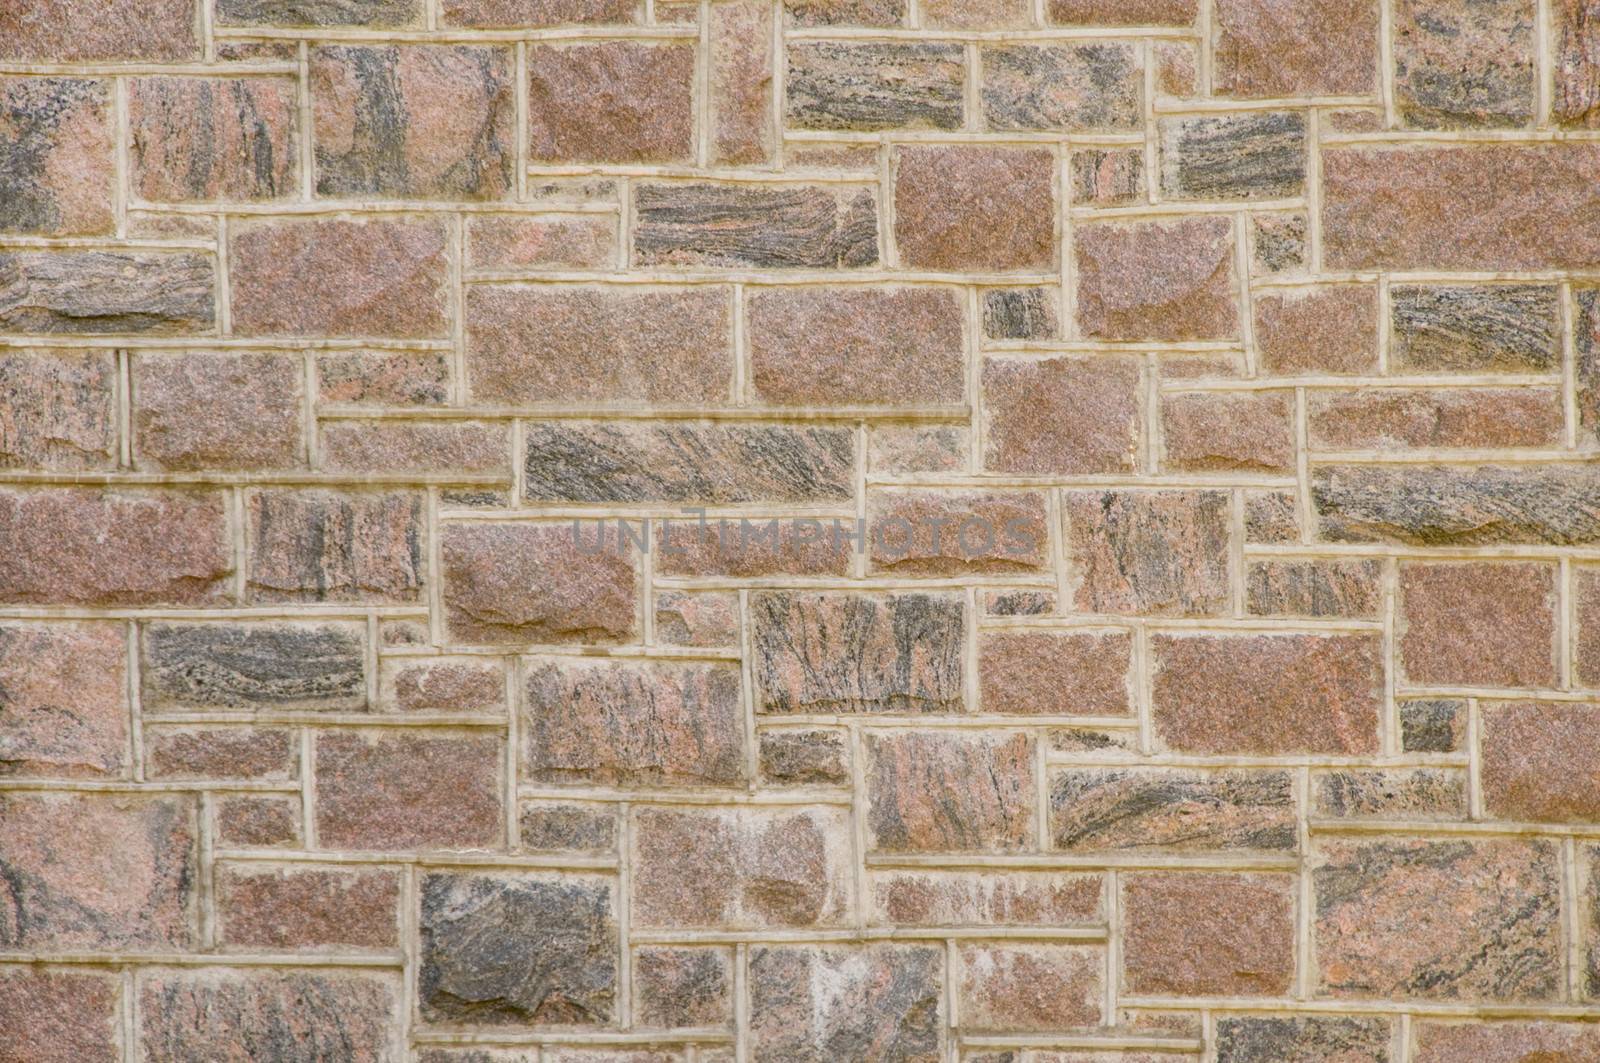 Black and reddish masonry block wall texture